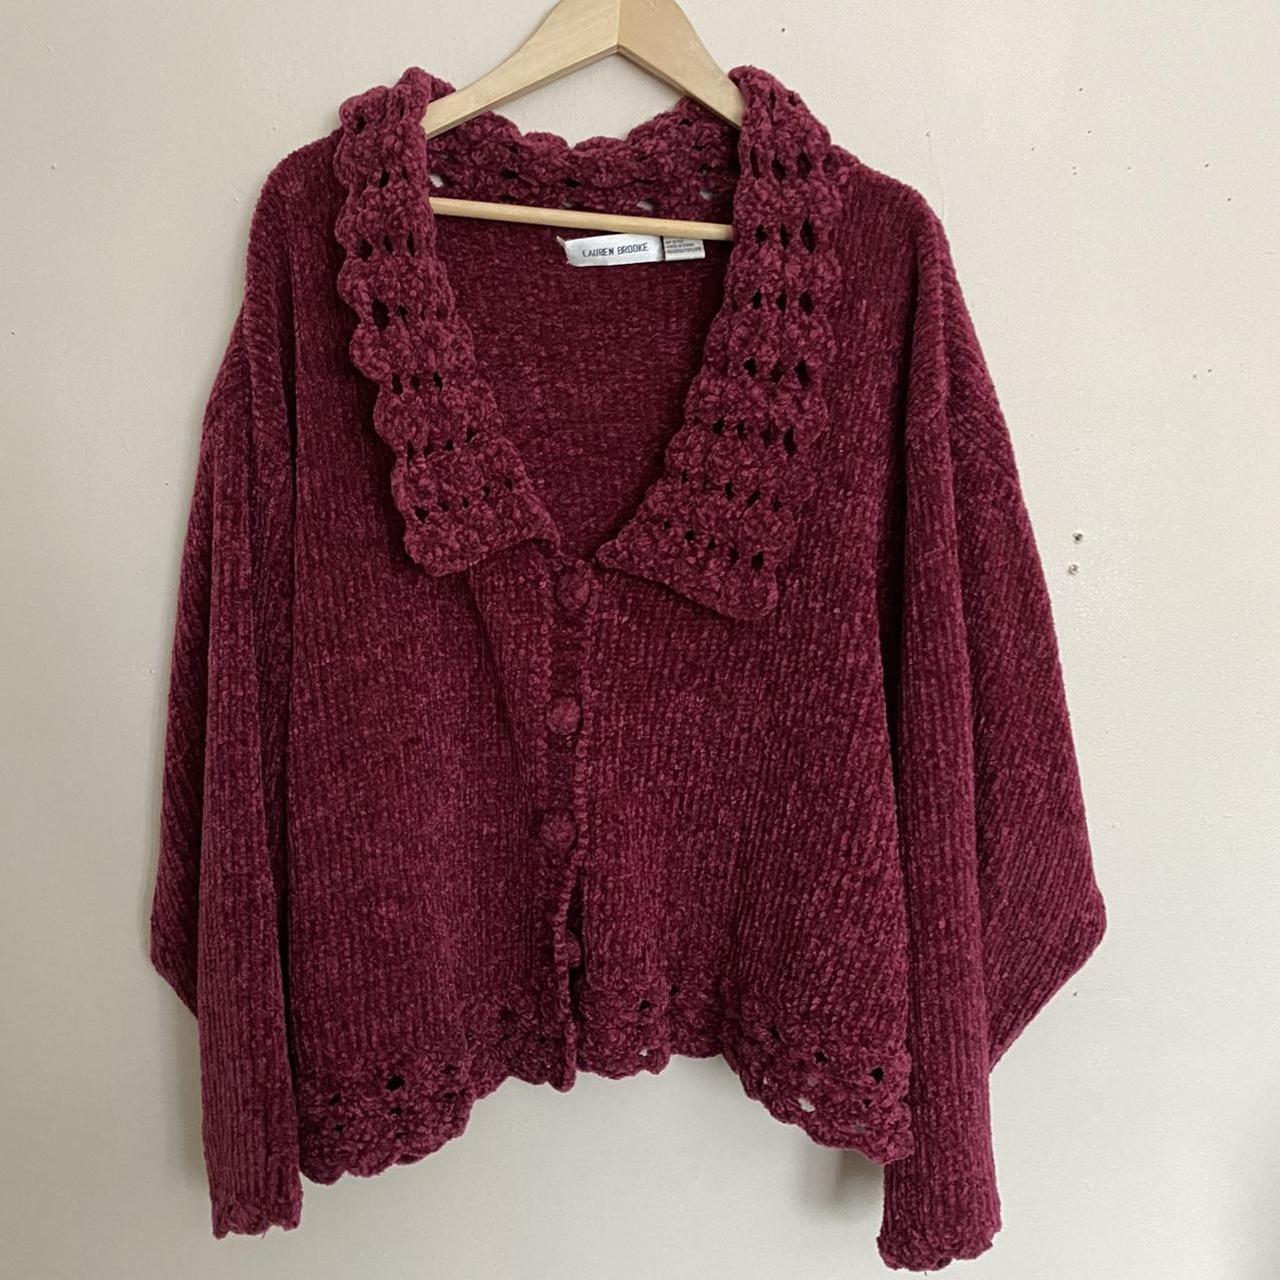 Product Image 2 - Vintage Lauren Brooke sweater 

#freepeople